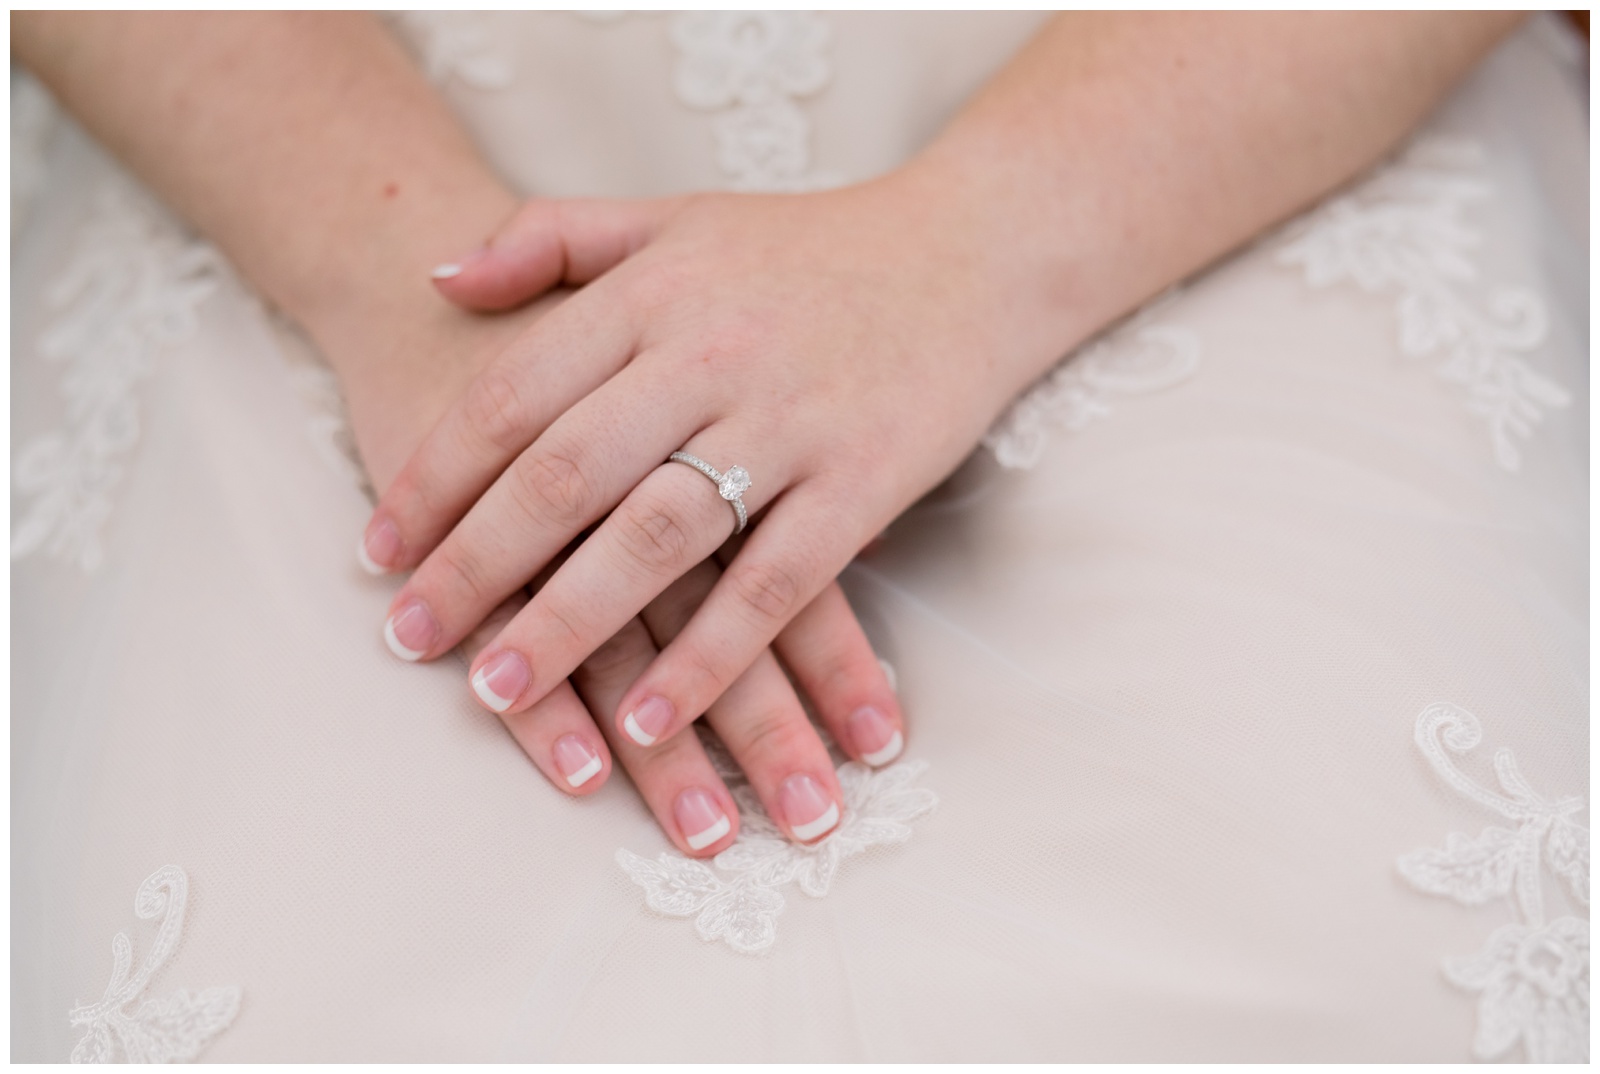 brides hands clasped in lap, engagement ring, atlanta ga wedding photographer 